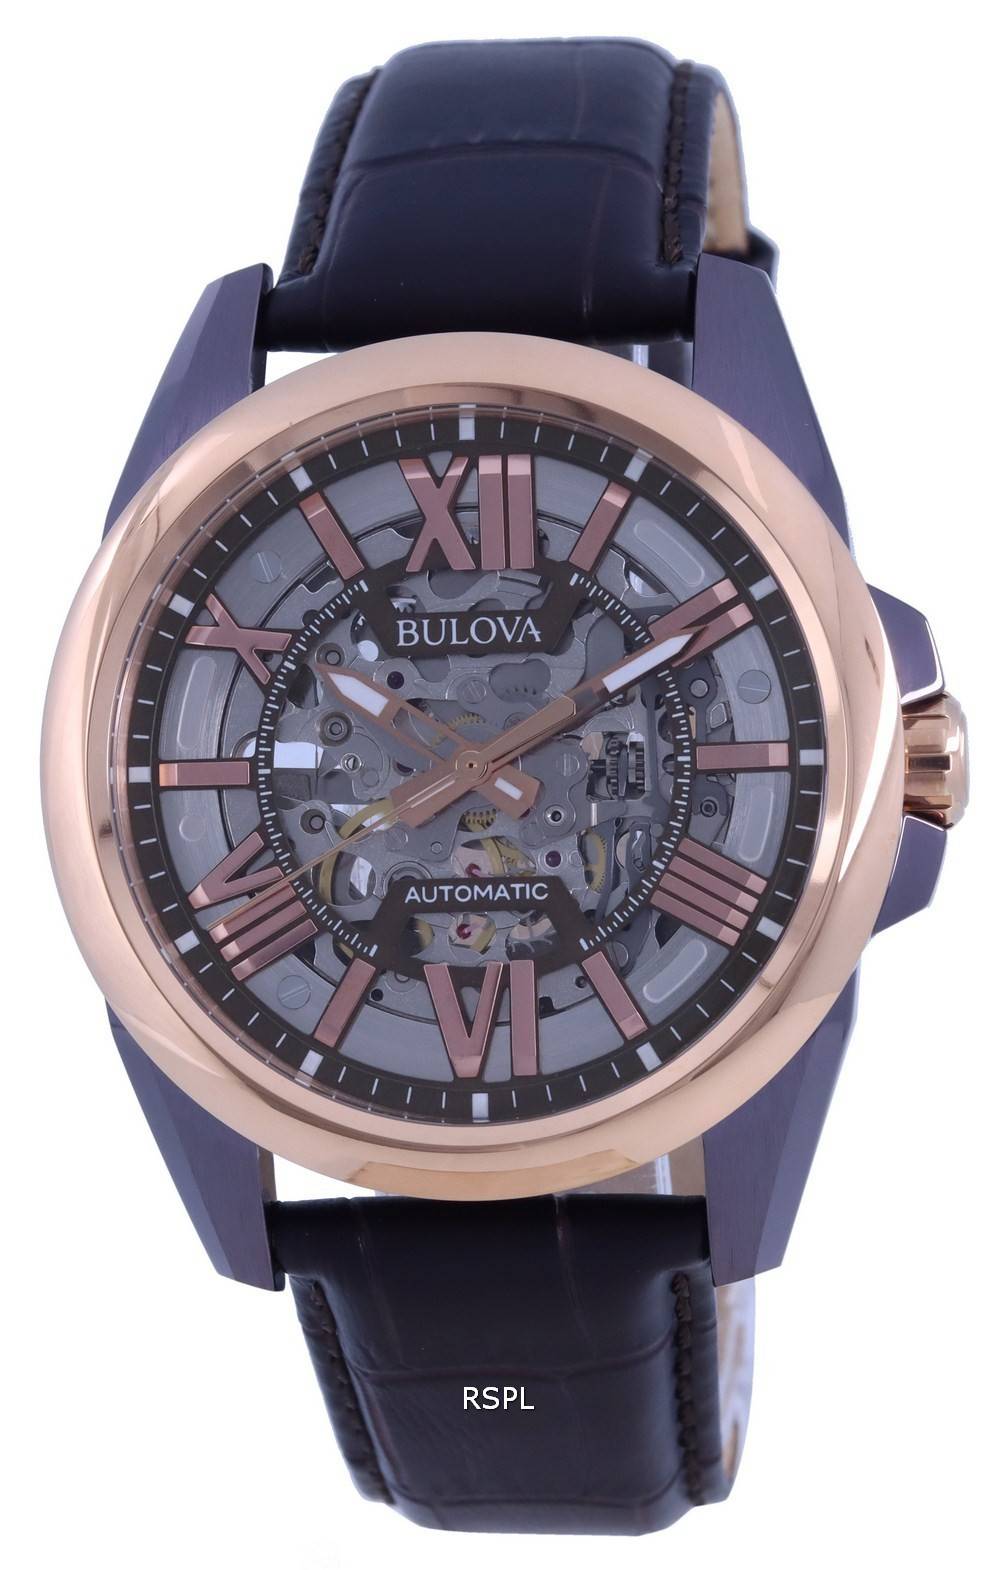 BULOVA ブローバ Classic Automatic 自動巻き機能デイト表示 - 腕時計